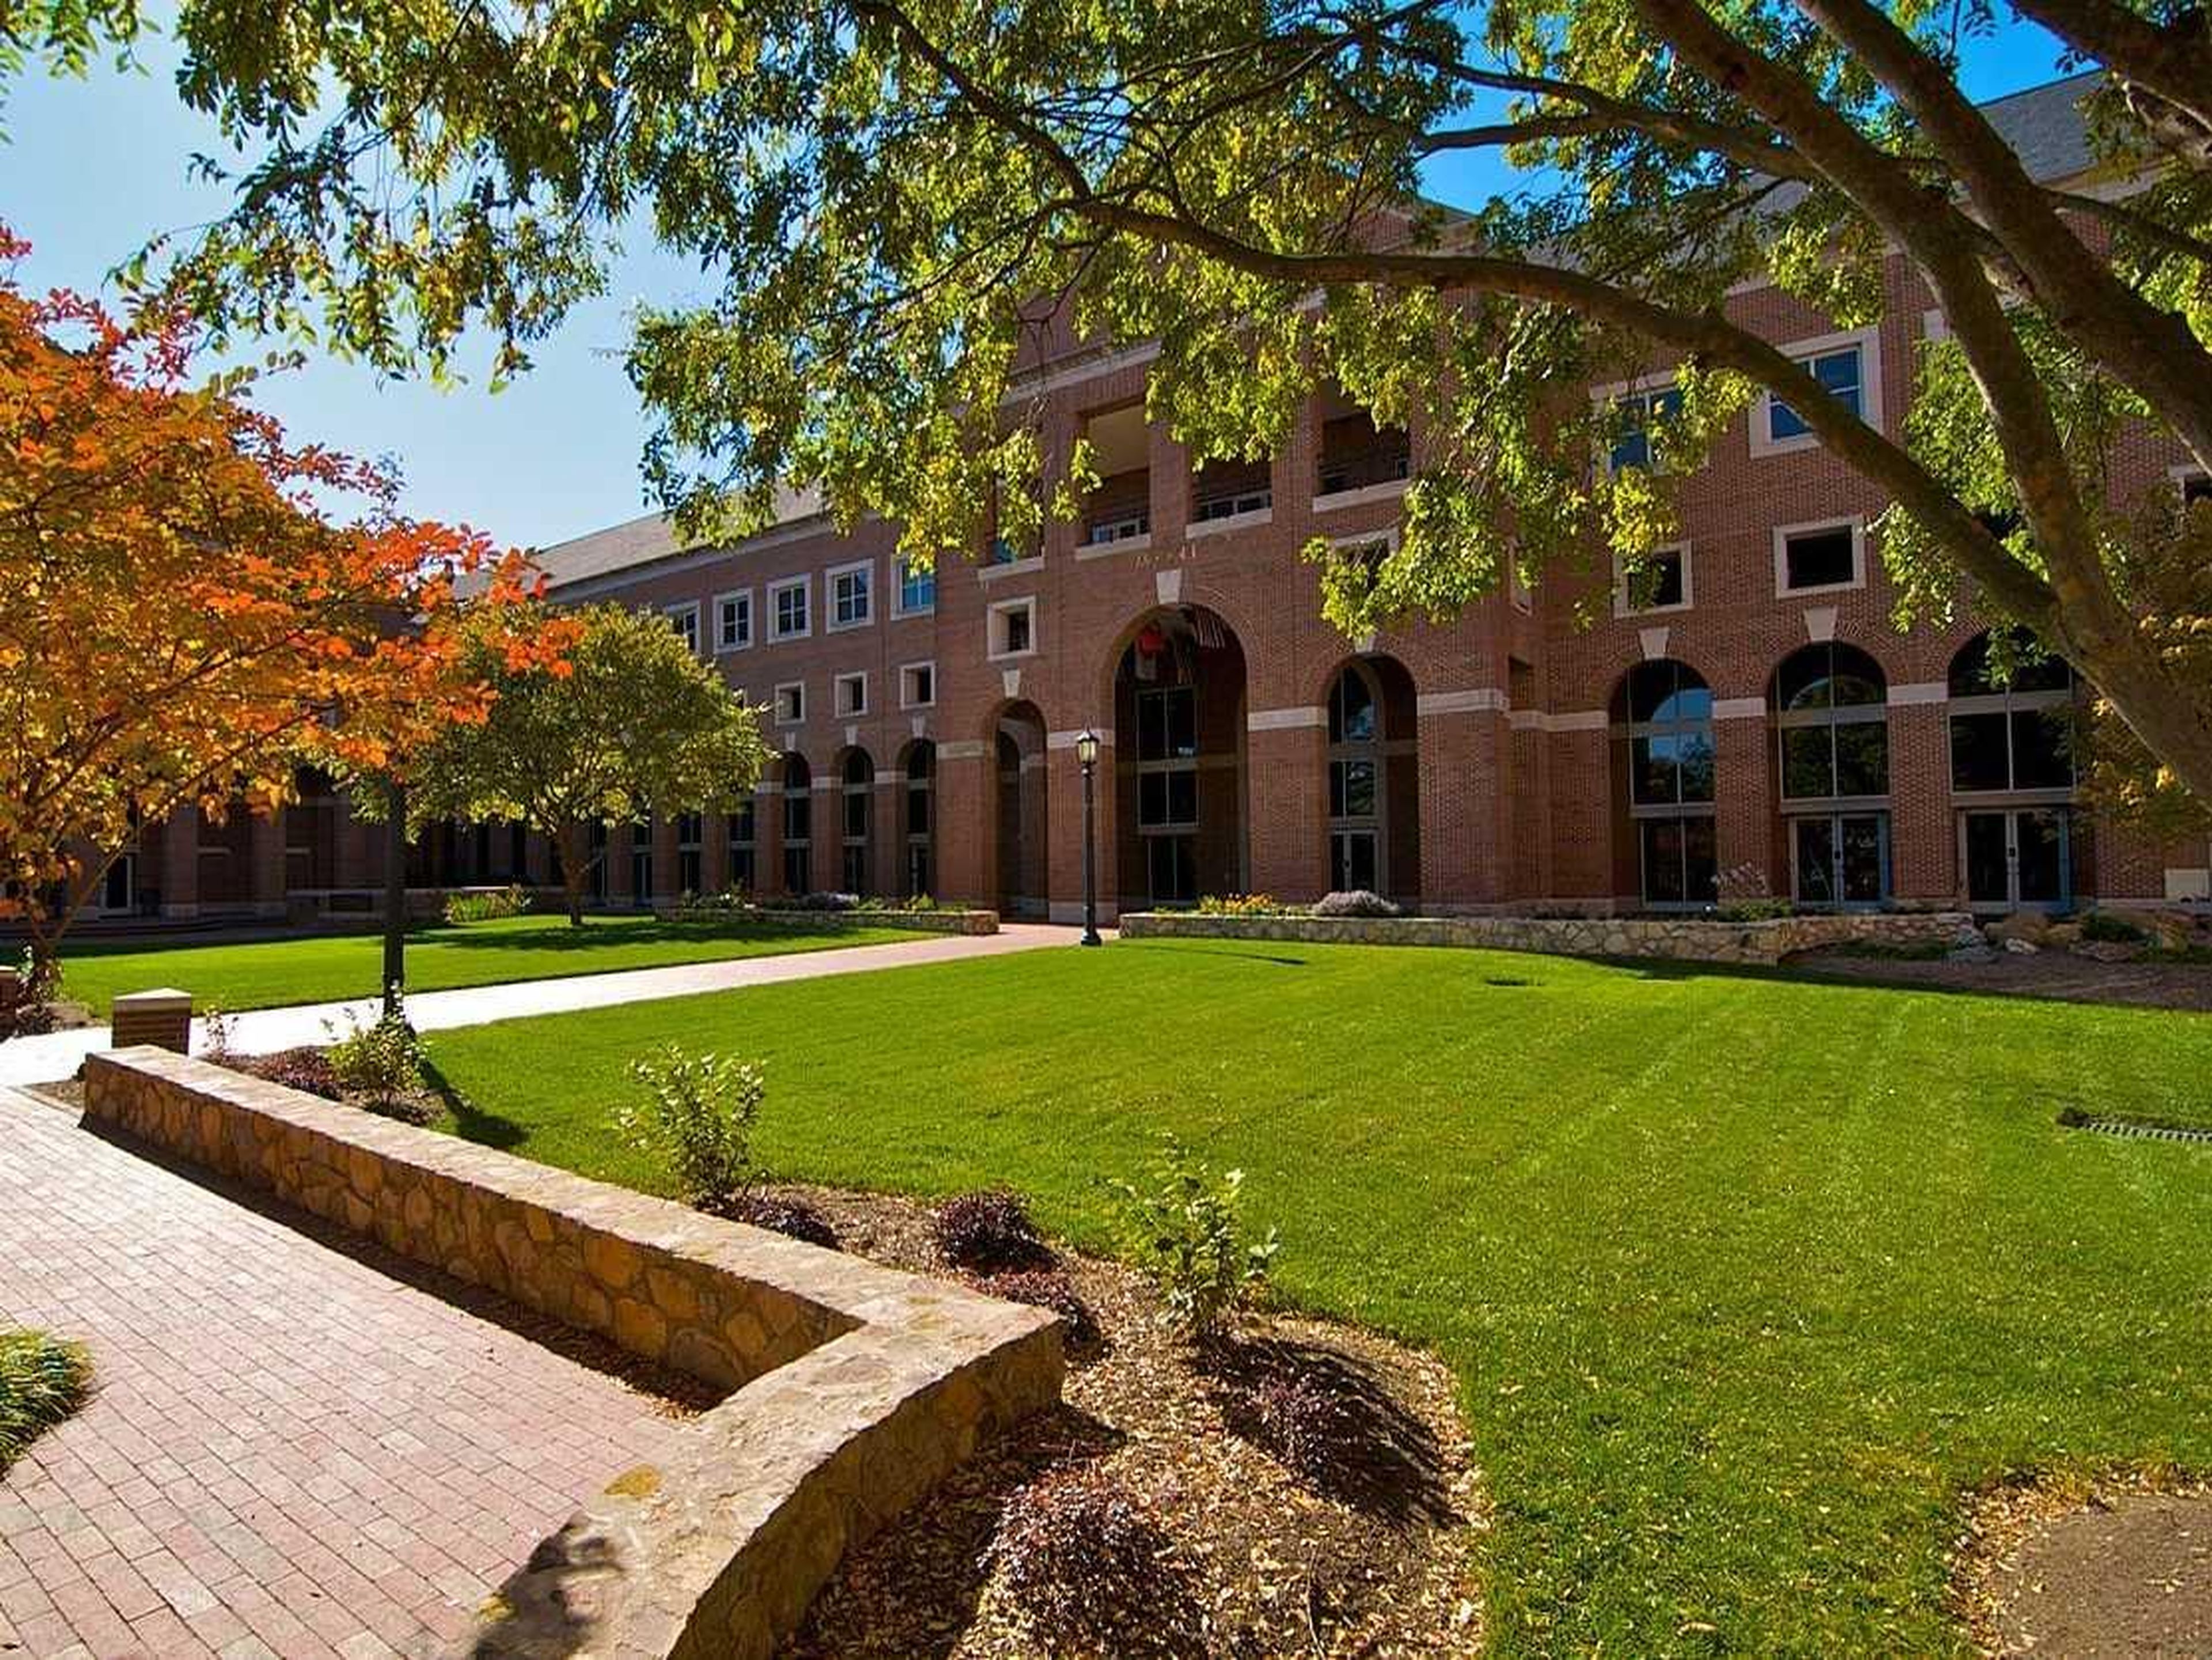 32. University of North Carolina (Kenan-Flagler)